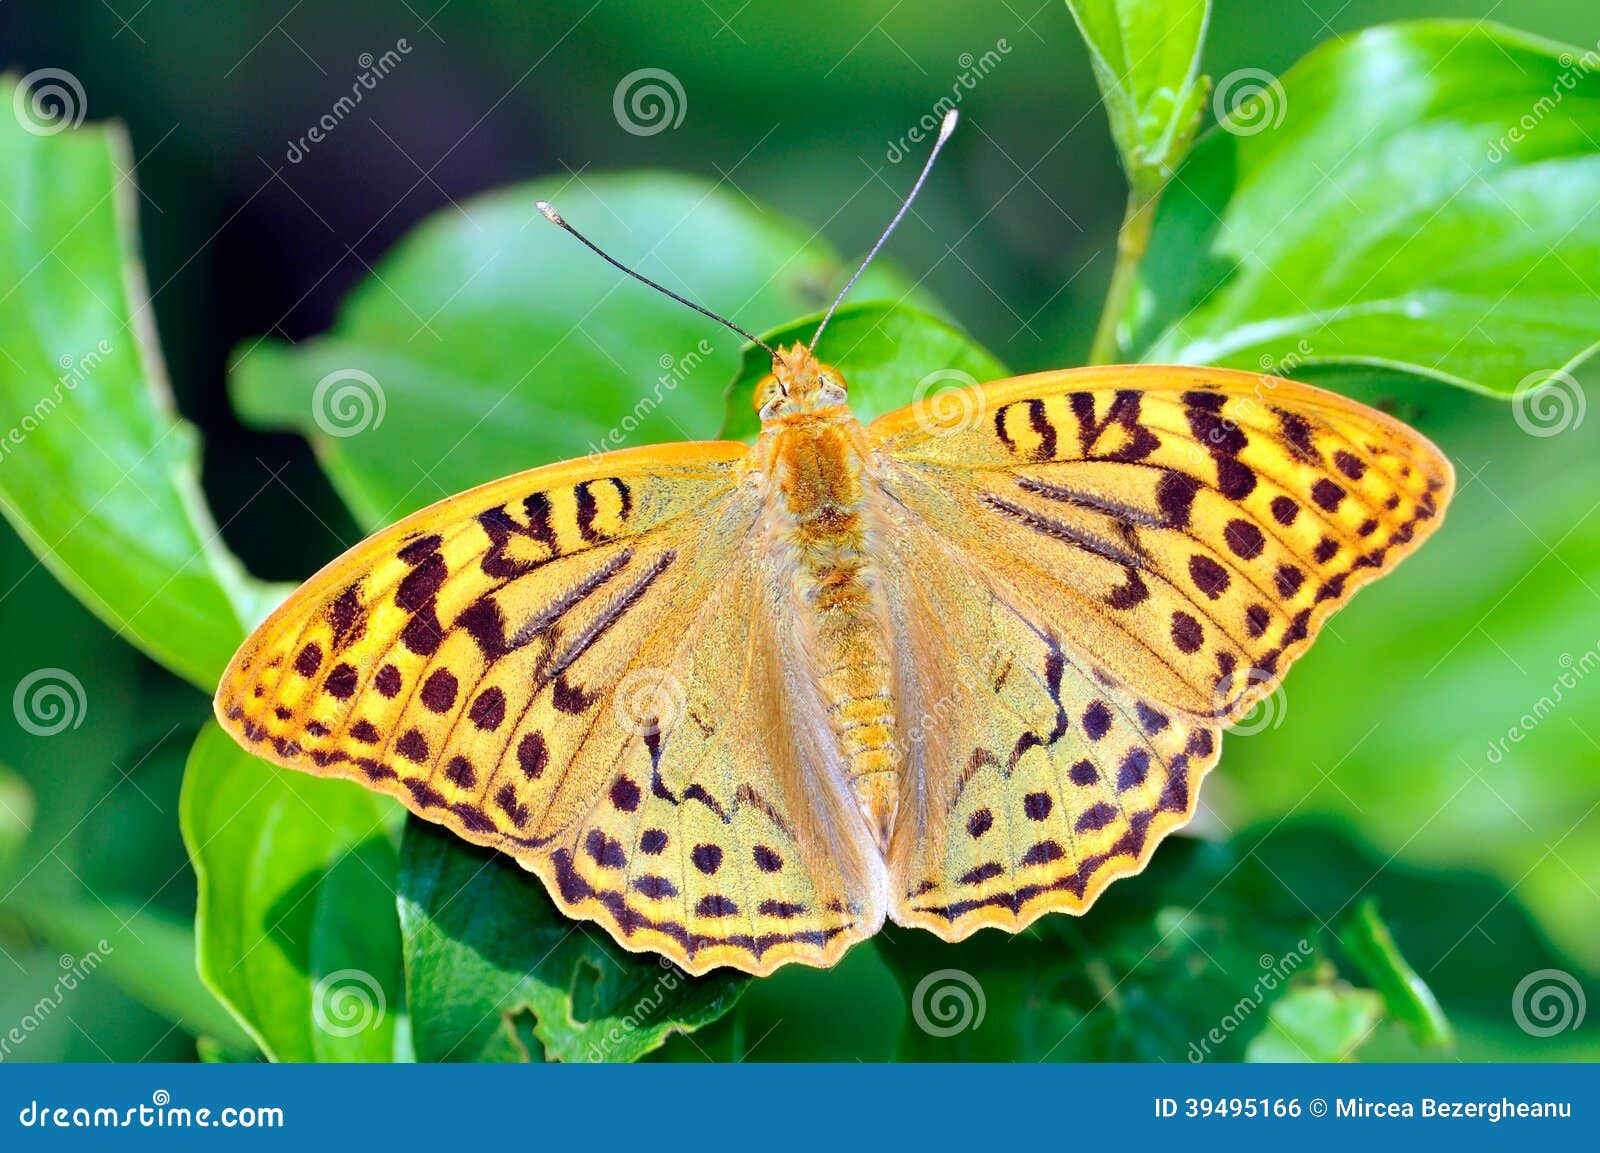 butterfly in natural habitat (melitaea aethera)